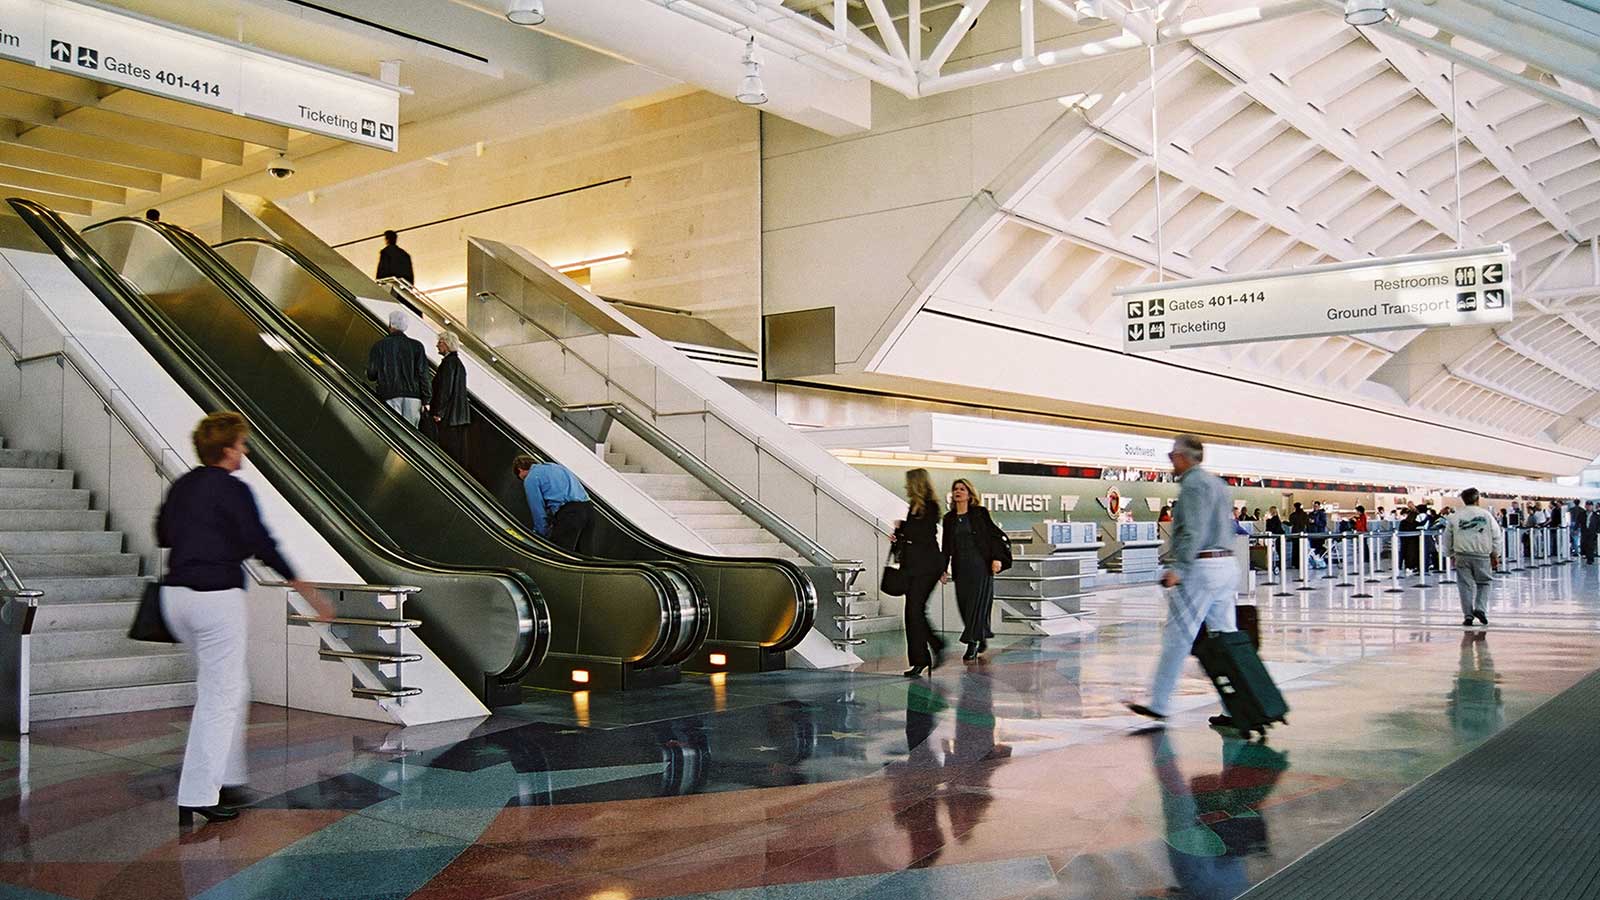 Ontario Airport ticketing counters and escalators